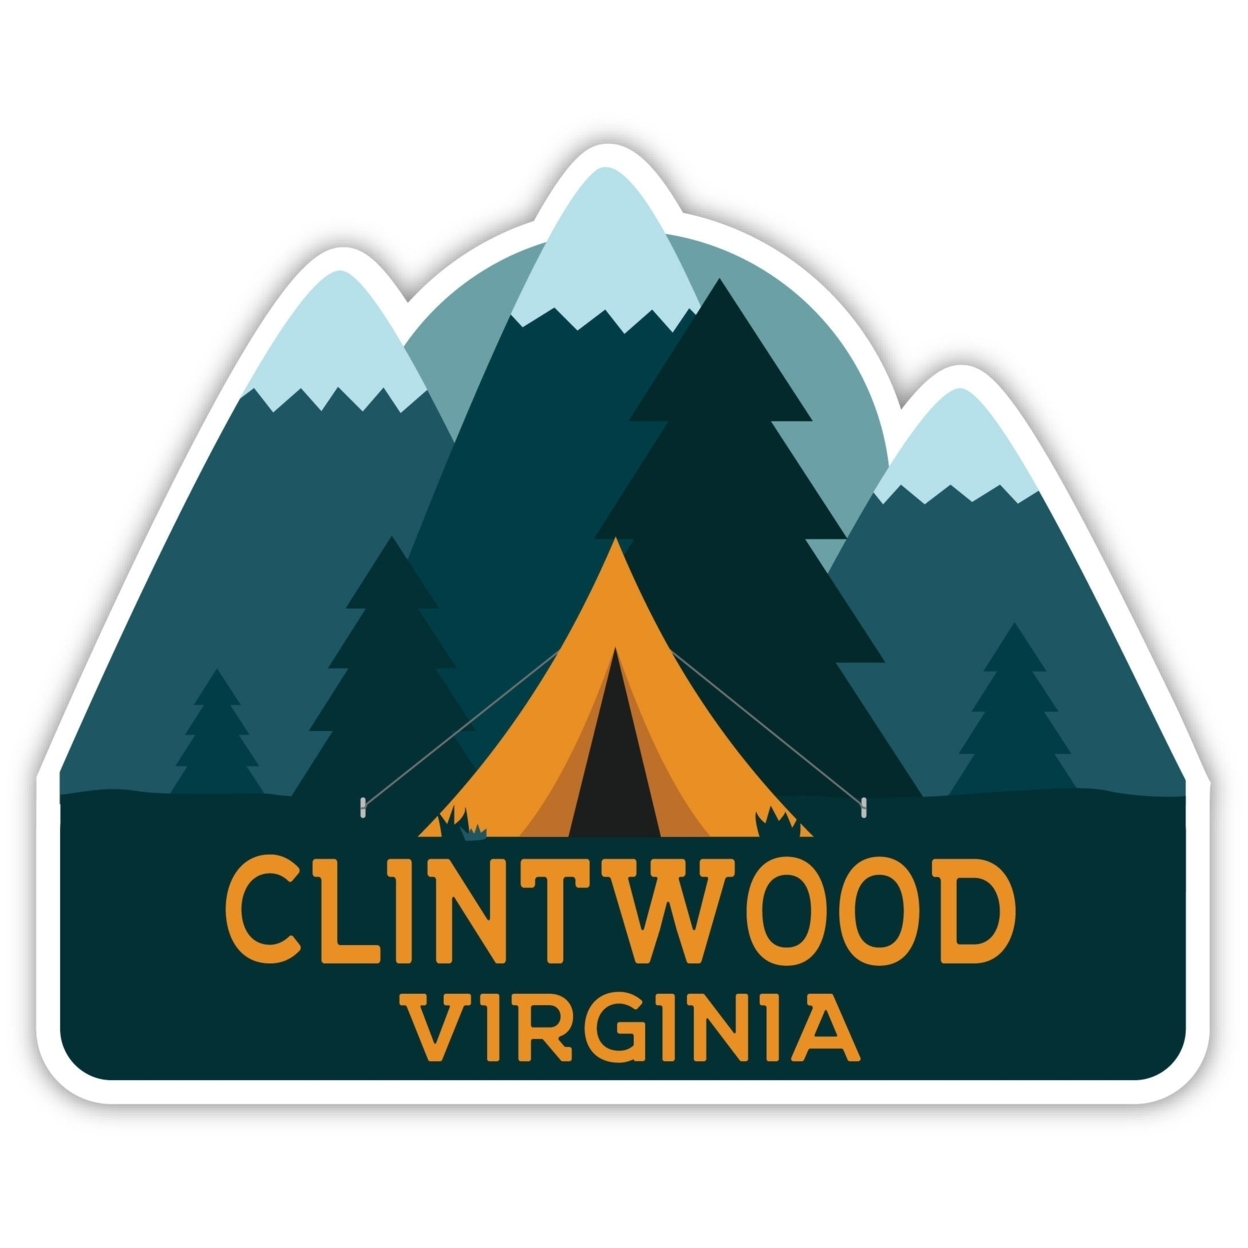 Clintwood Virginia Souvenir Decorative Stickers (Choose Theme And Size) - Single Unit, 4-Inch, Tent